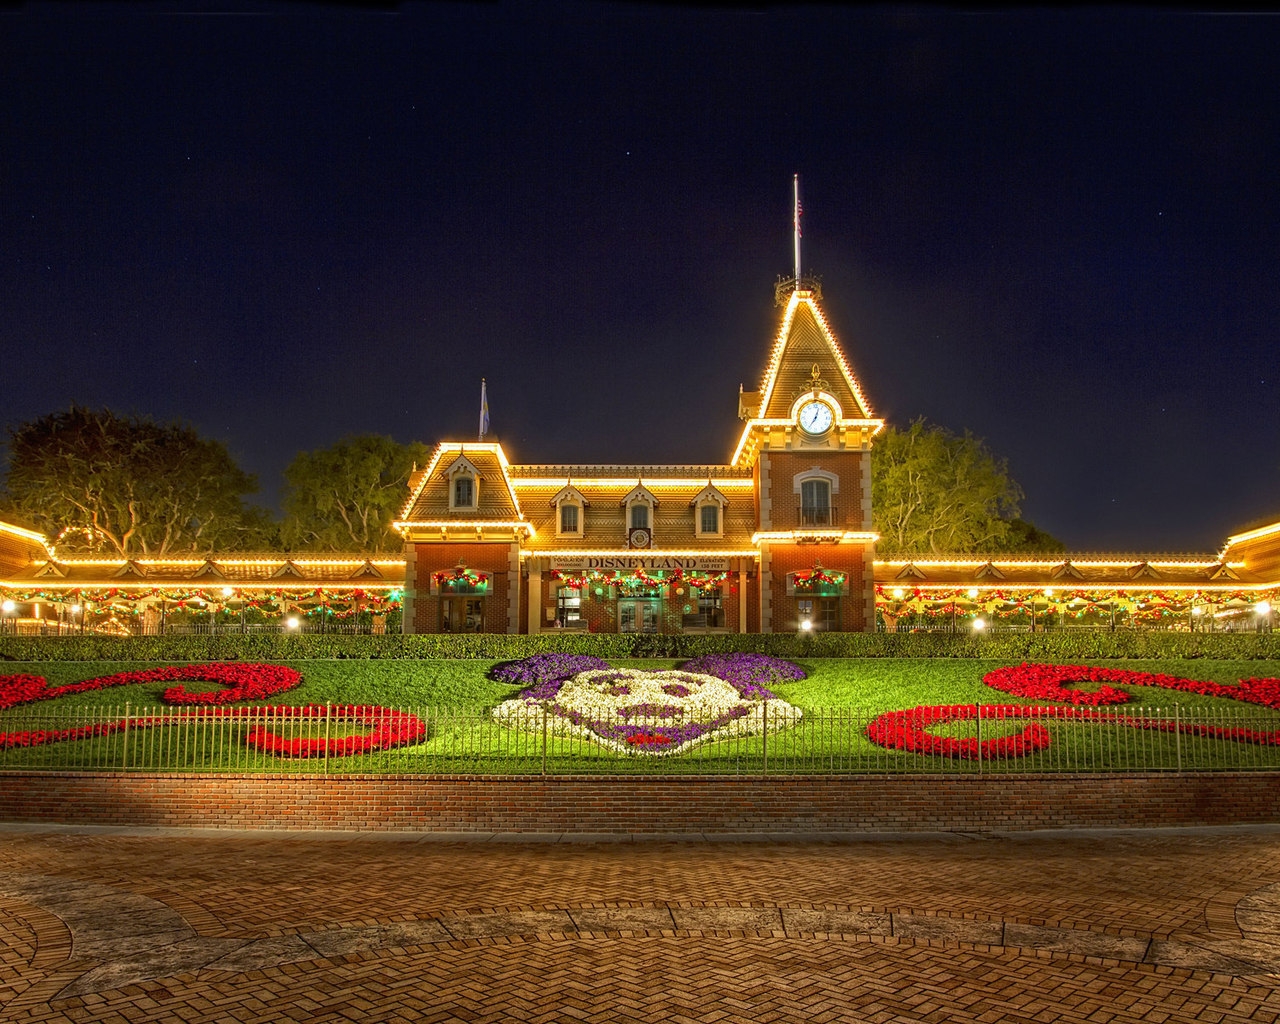 Christmas at Disneyland for 1280 x 1024 resolution